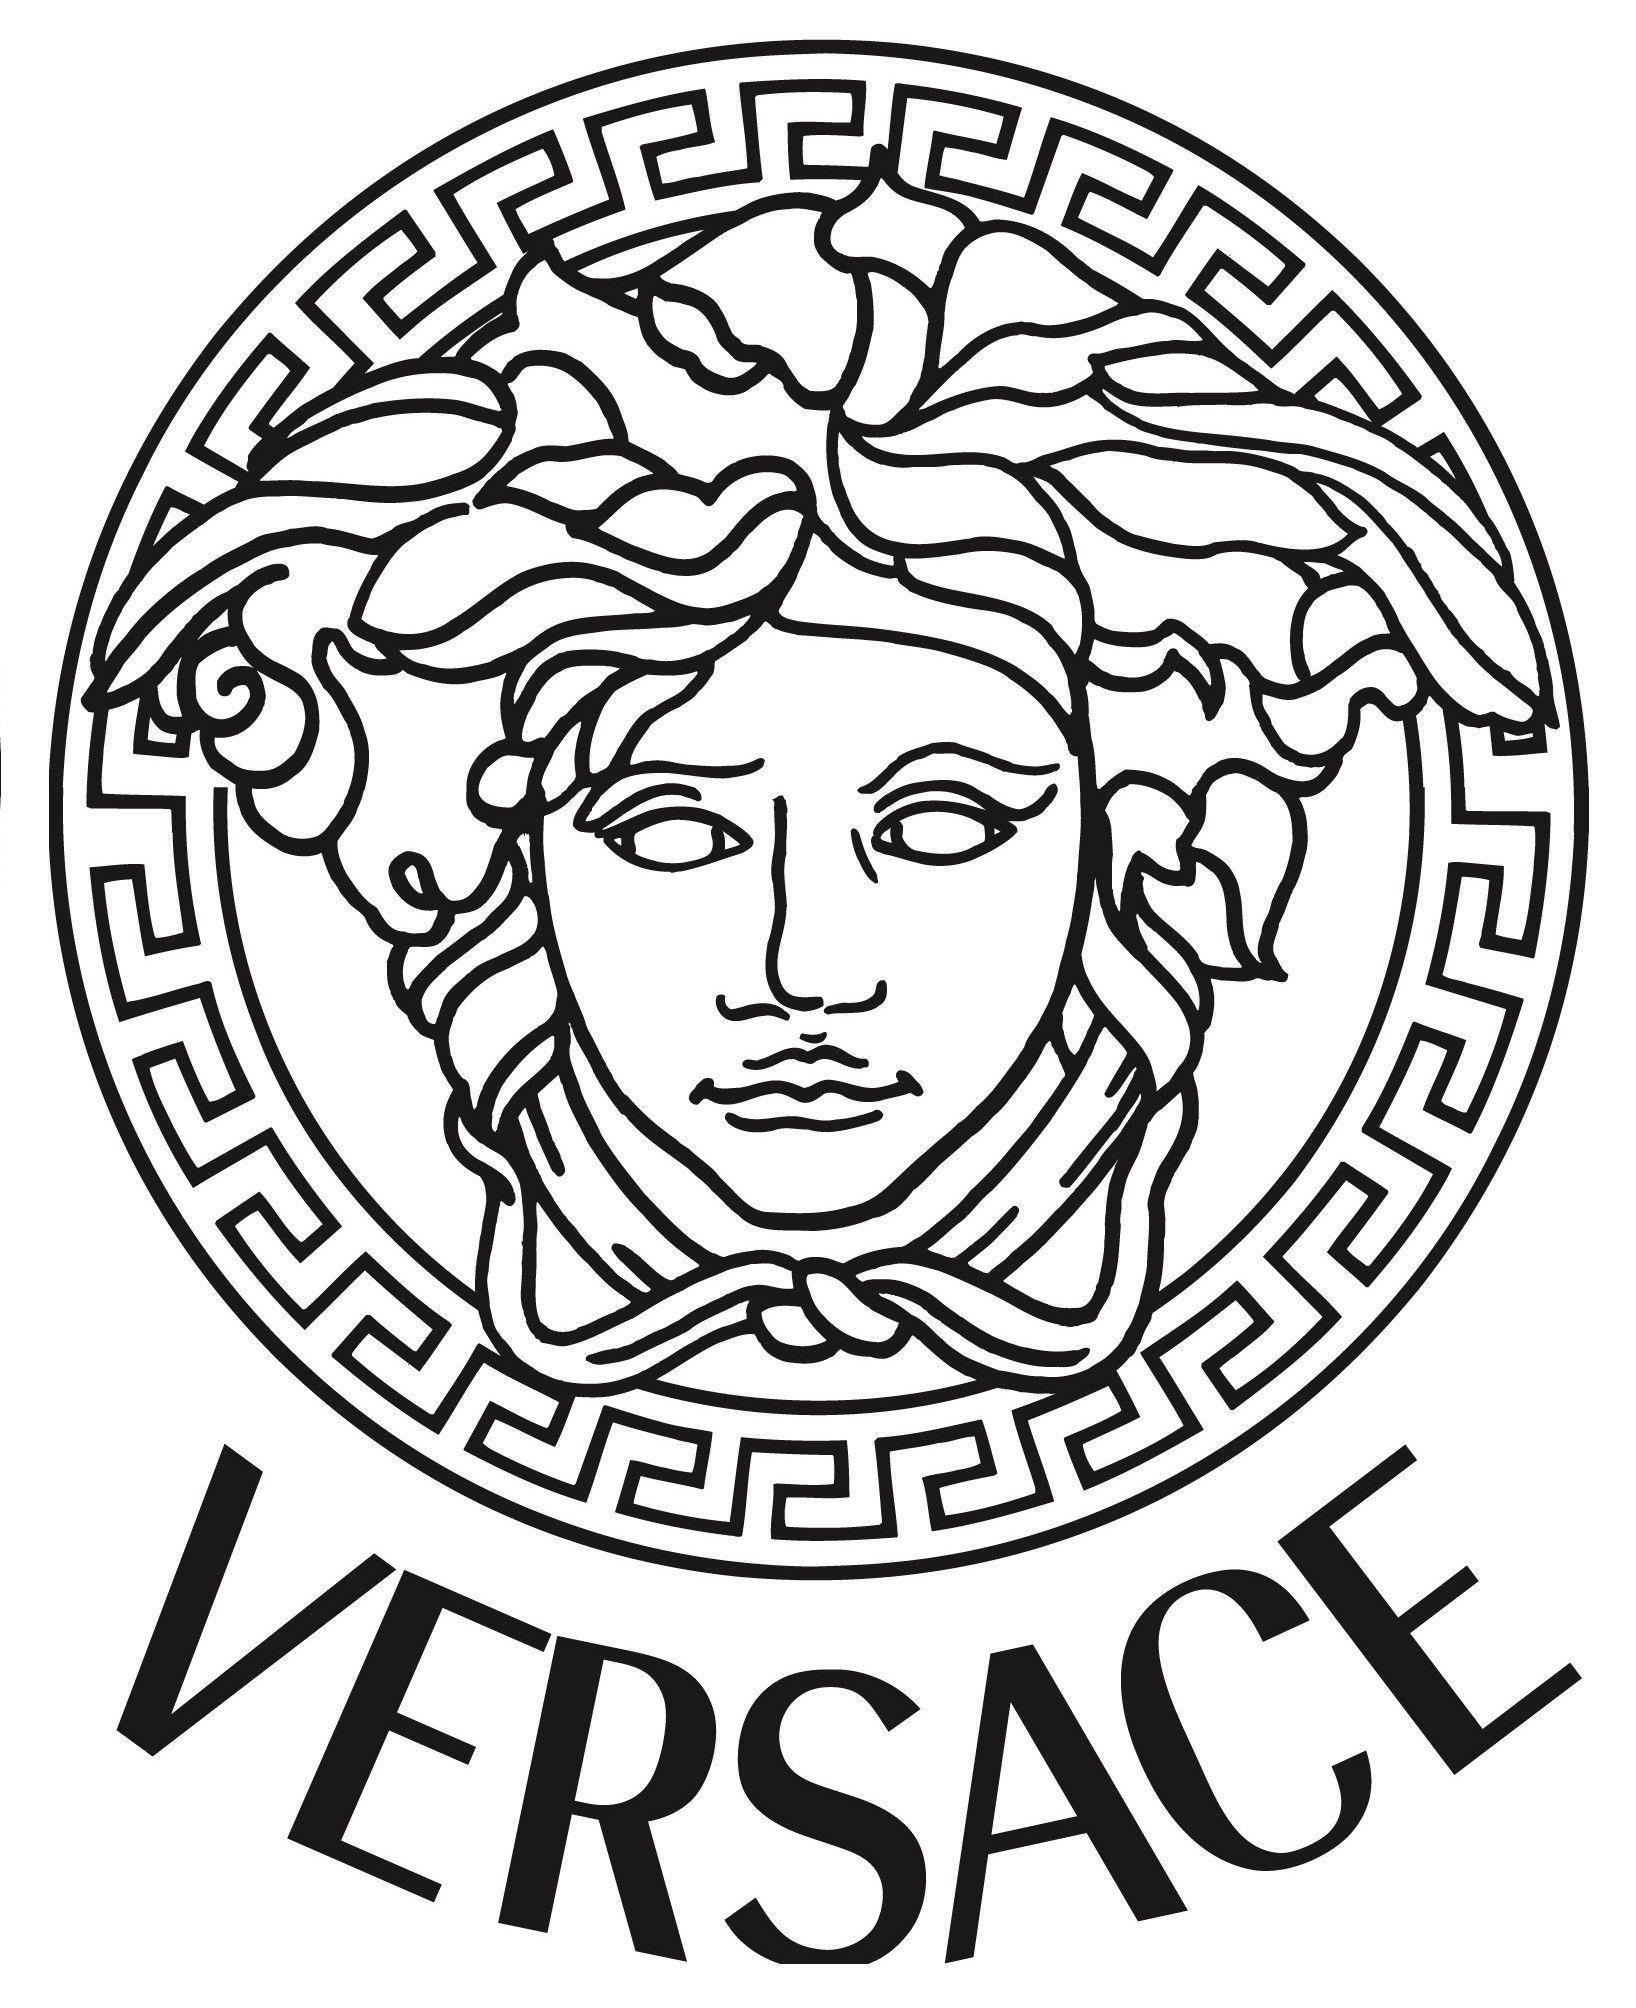 Versace Logo iPhone 7 Wallpapers - Top Free Versace Logo iPhone 7 ...